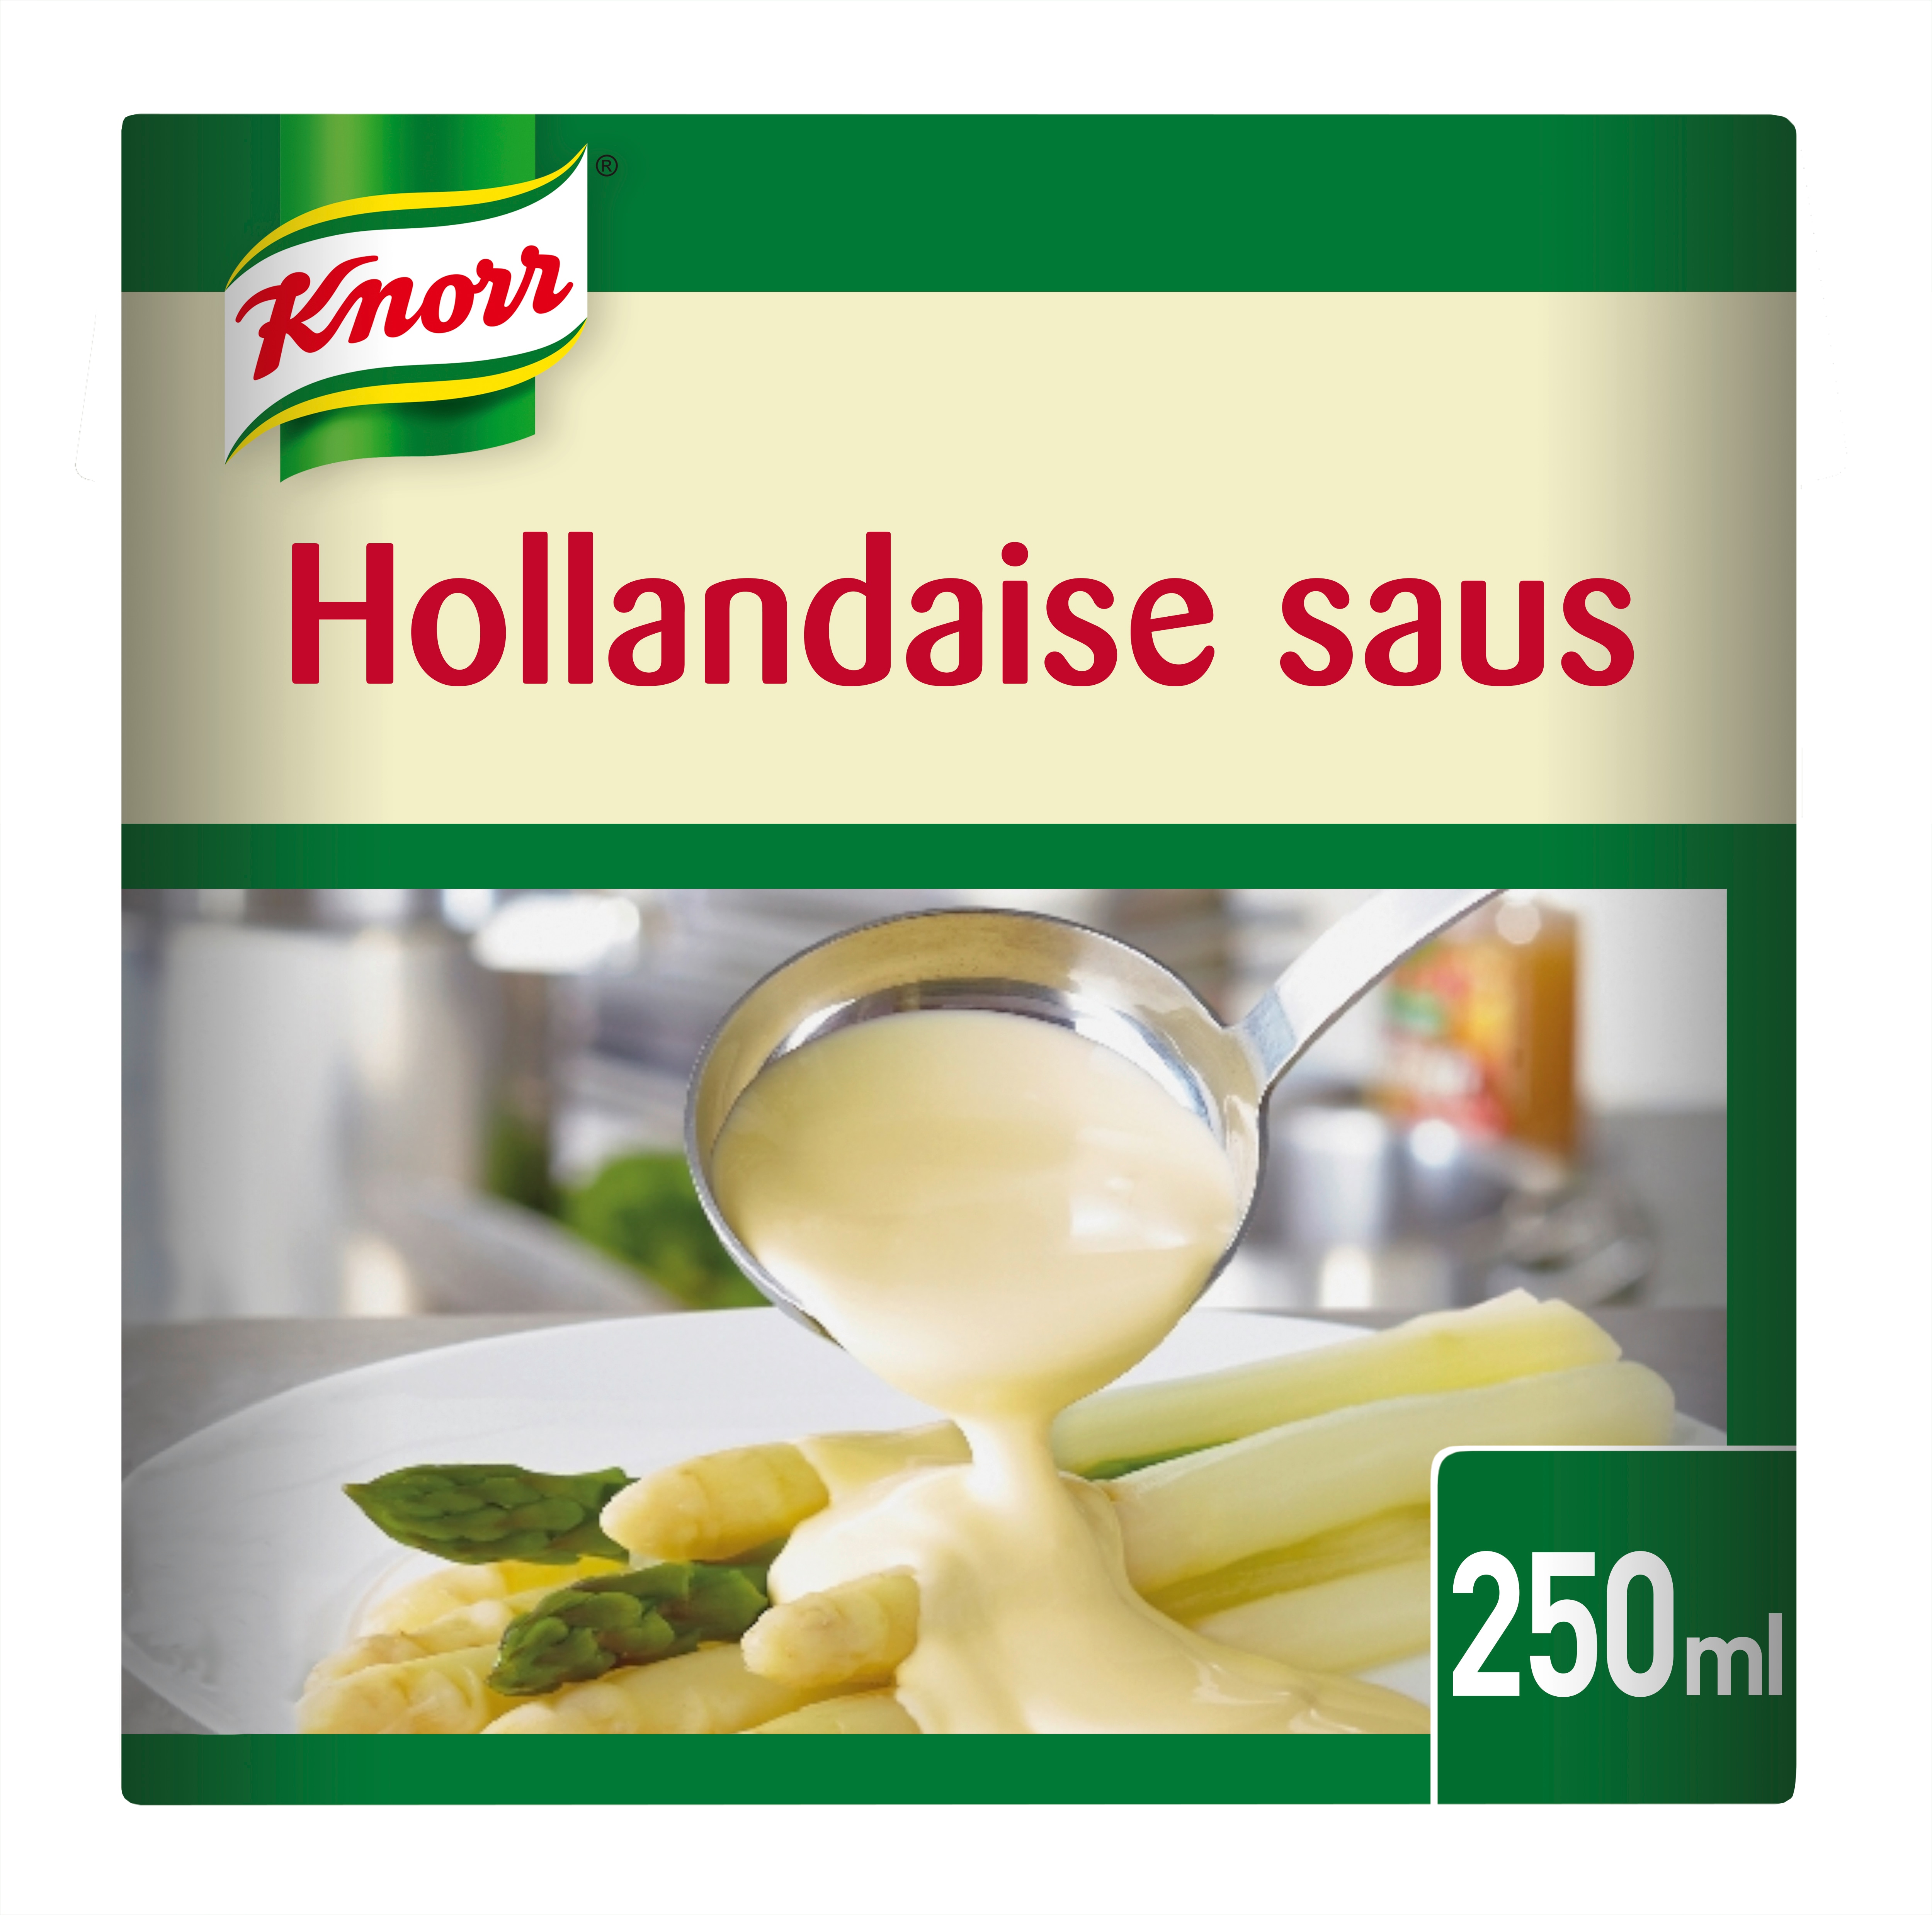 Knorr Garde d’Or Hollandaise Saus 250ml - 